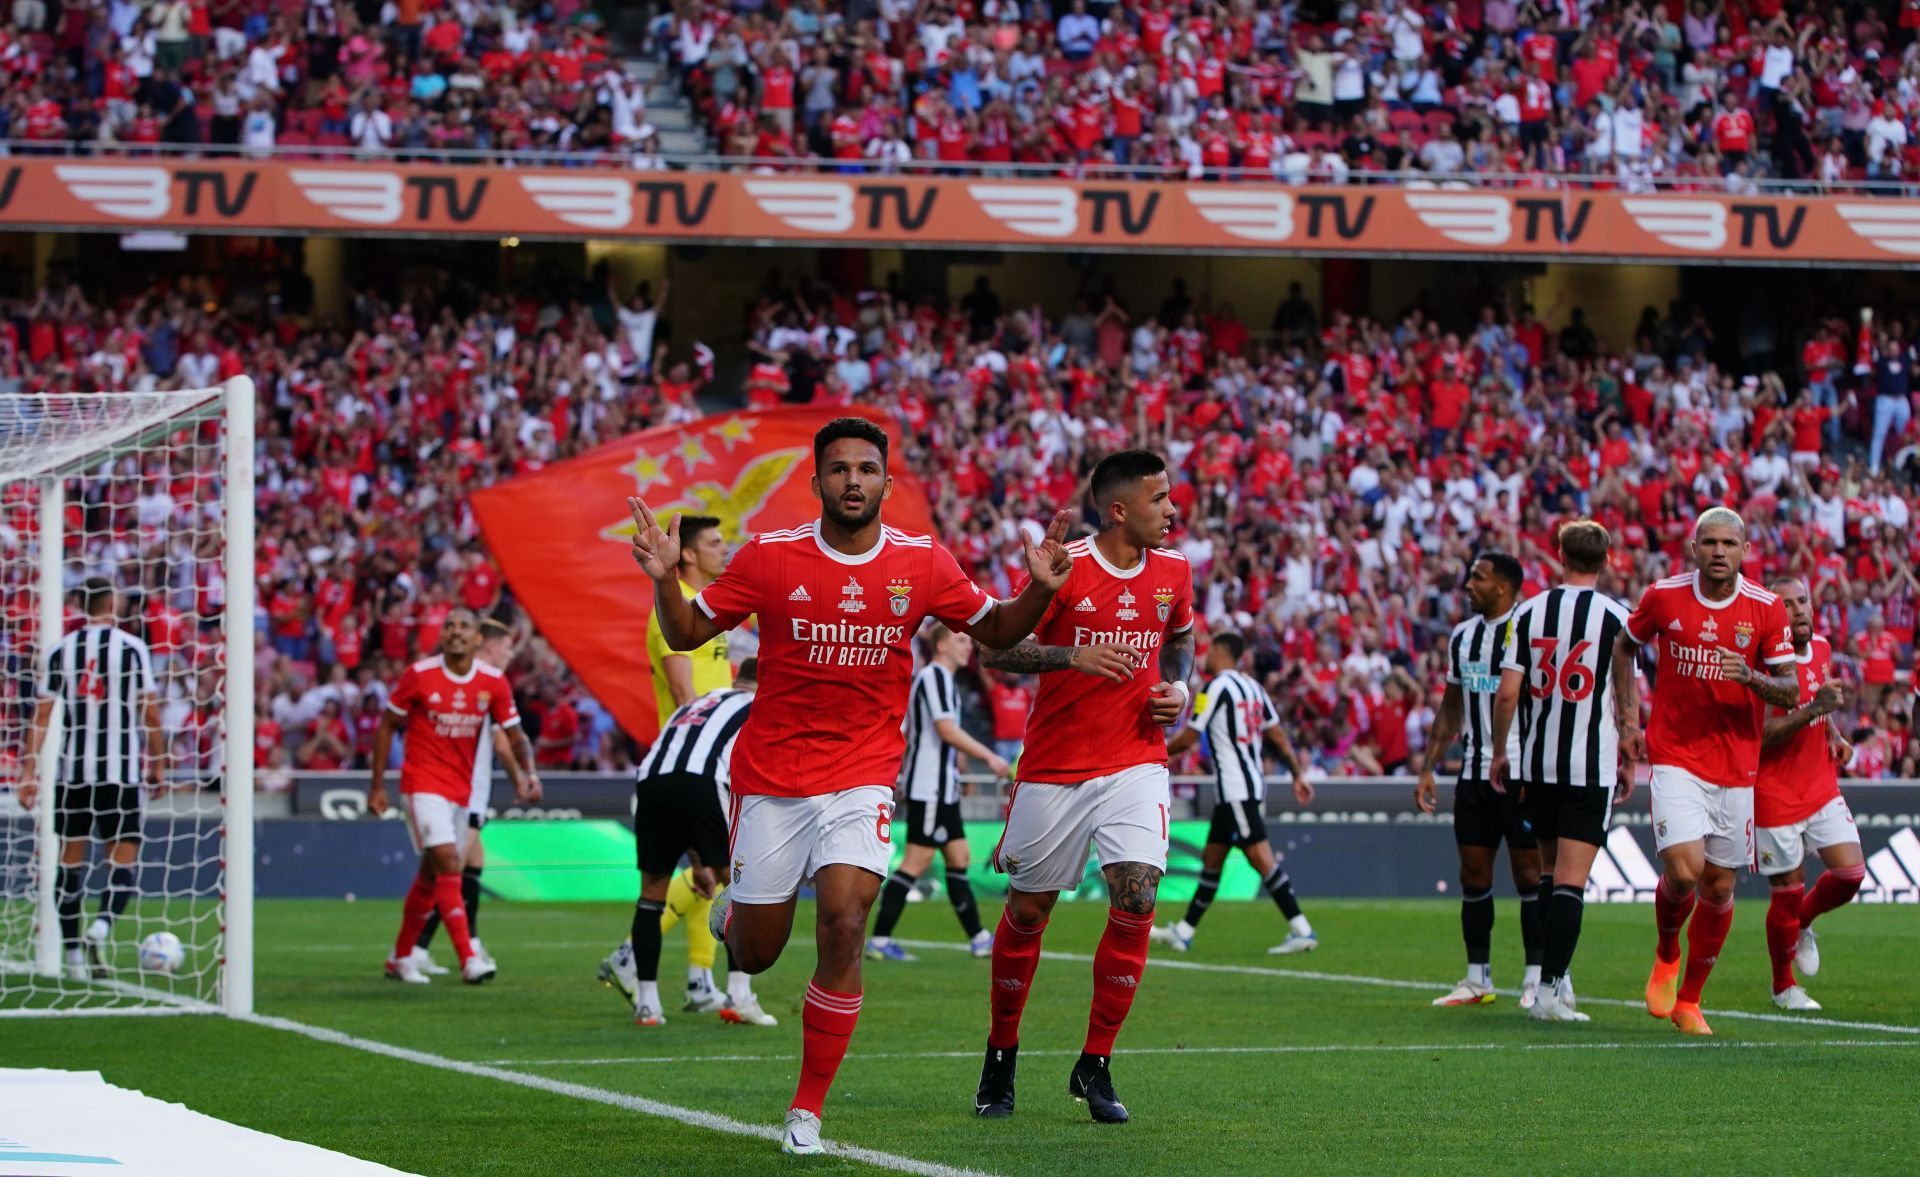 Benfica face Casa Pia in their upcoming Primeira Liga fixture on Saturday